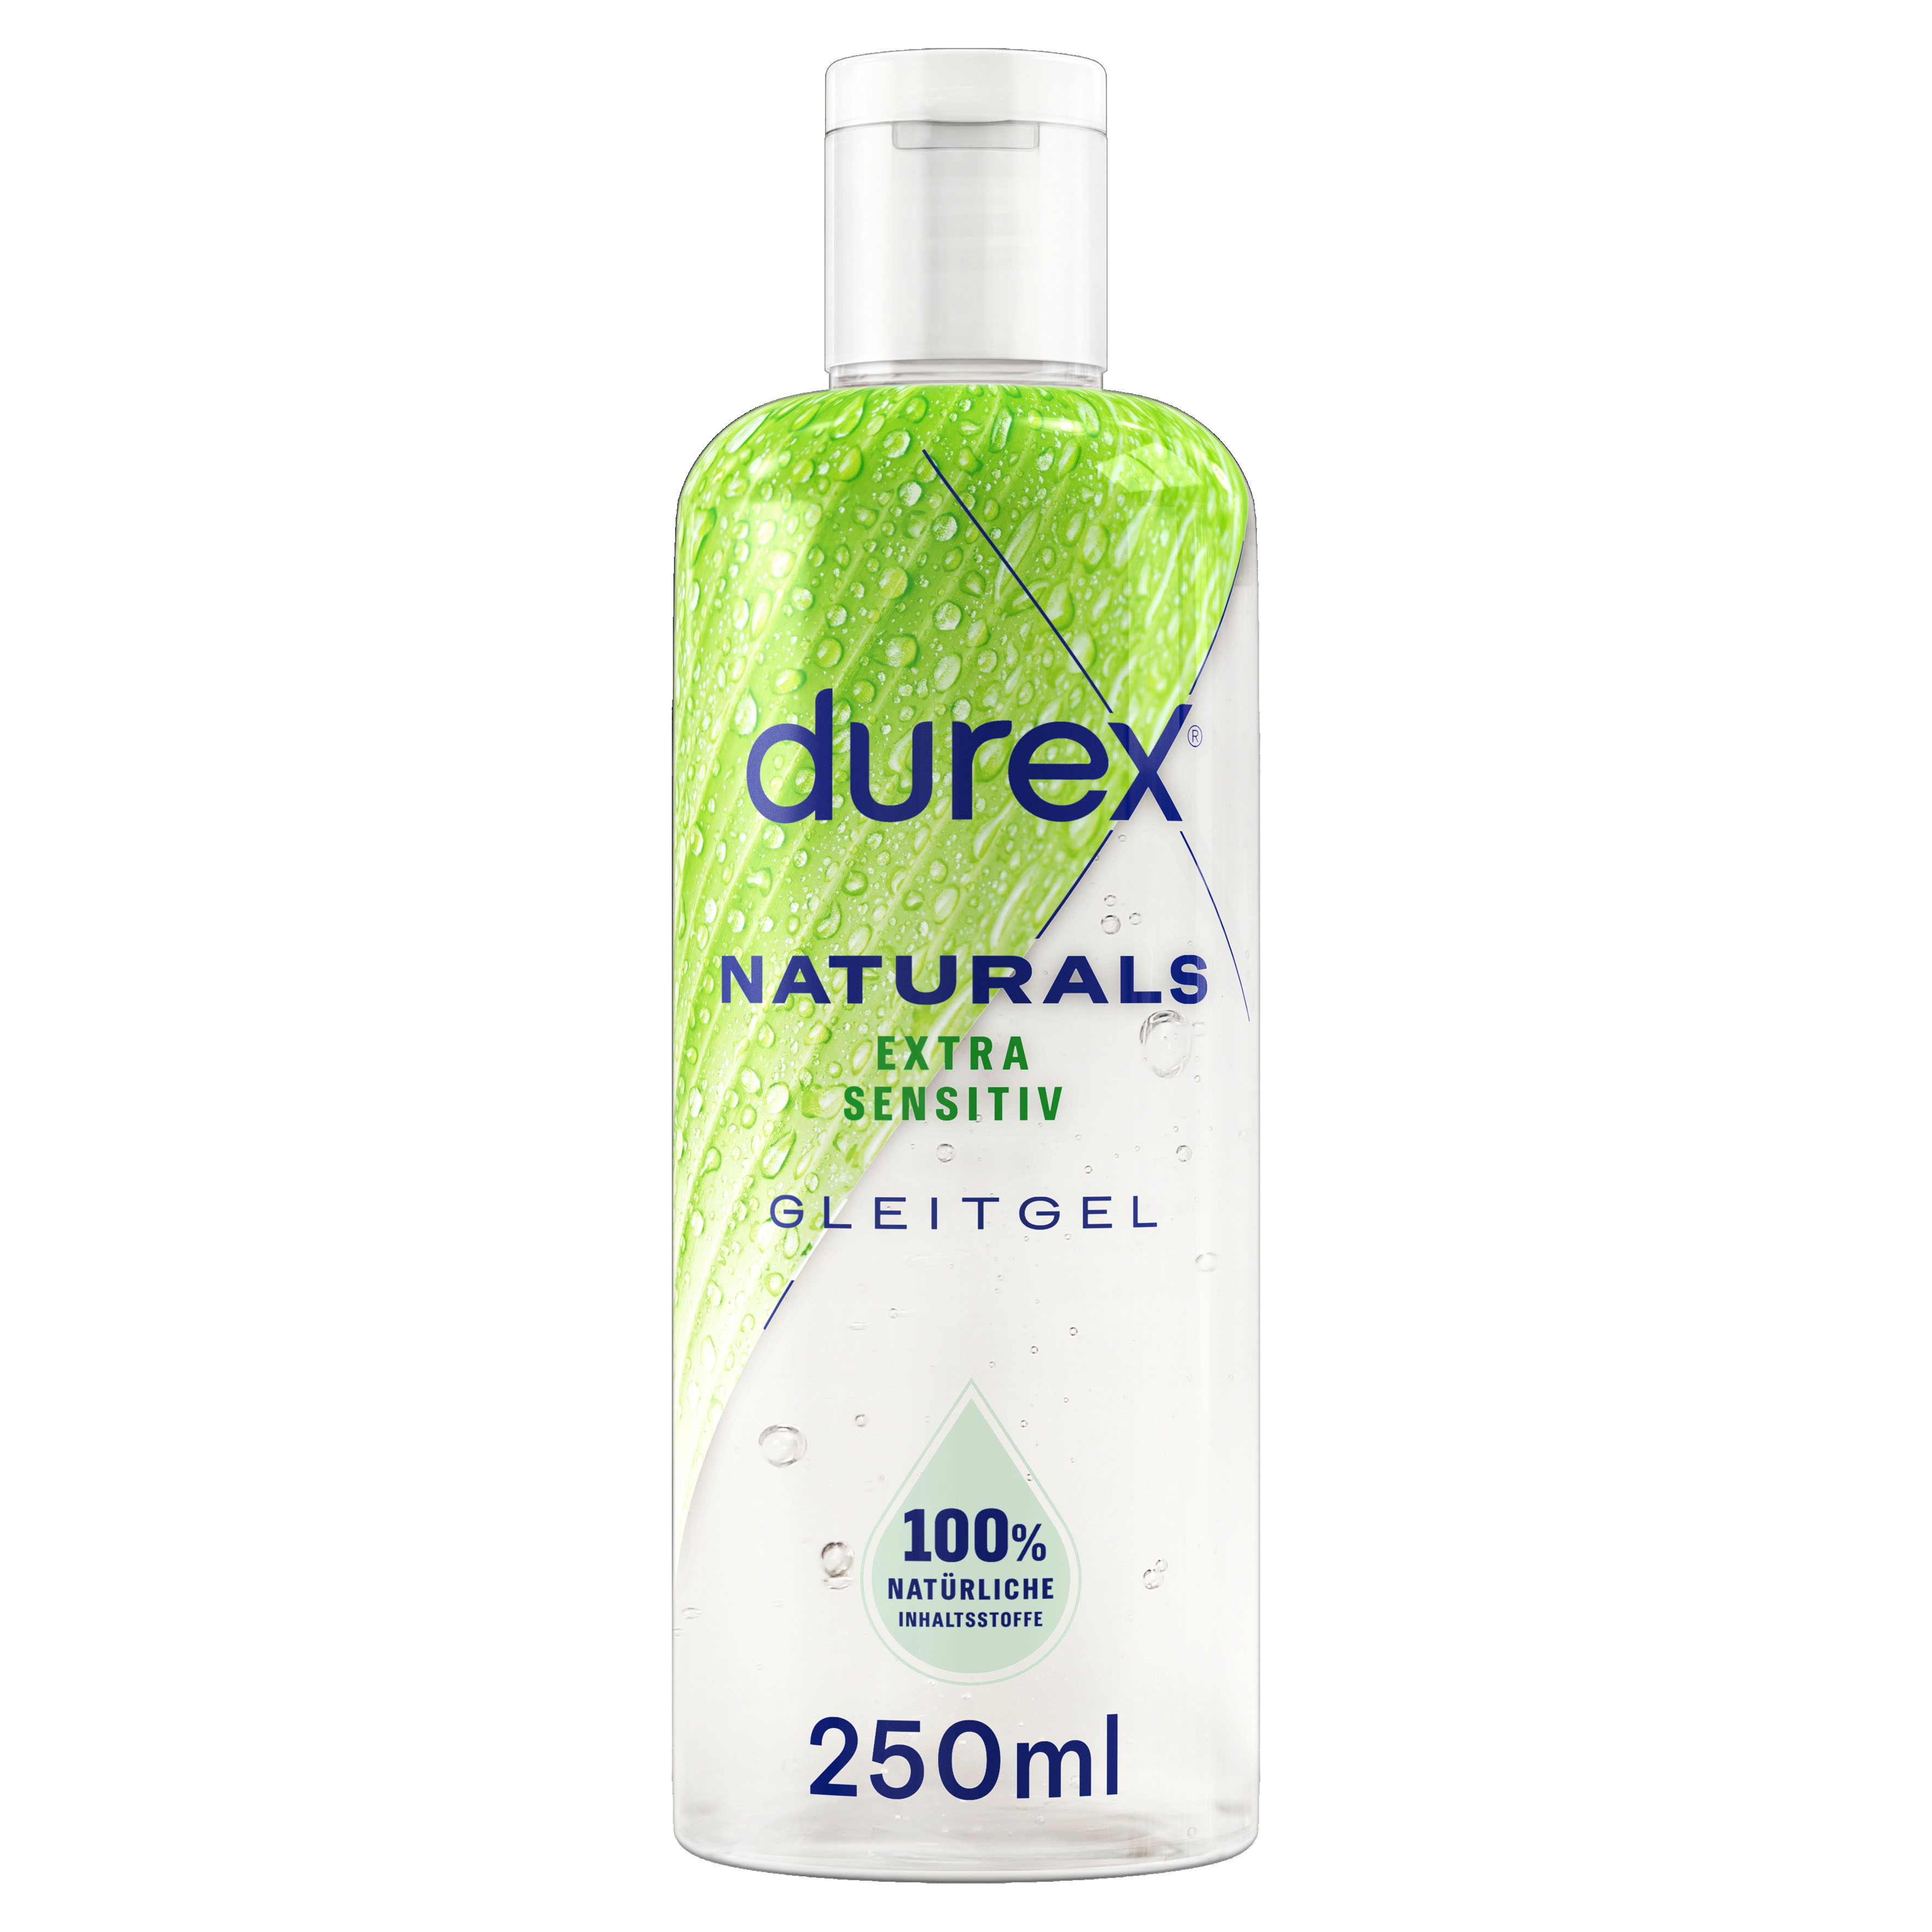 DUREX Gel Naturals Extra Sensitive 250ml -New Design-